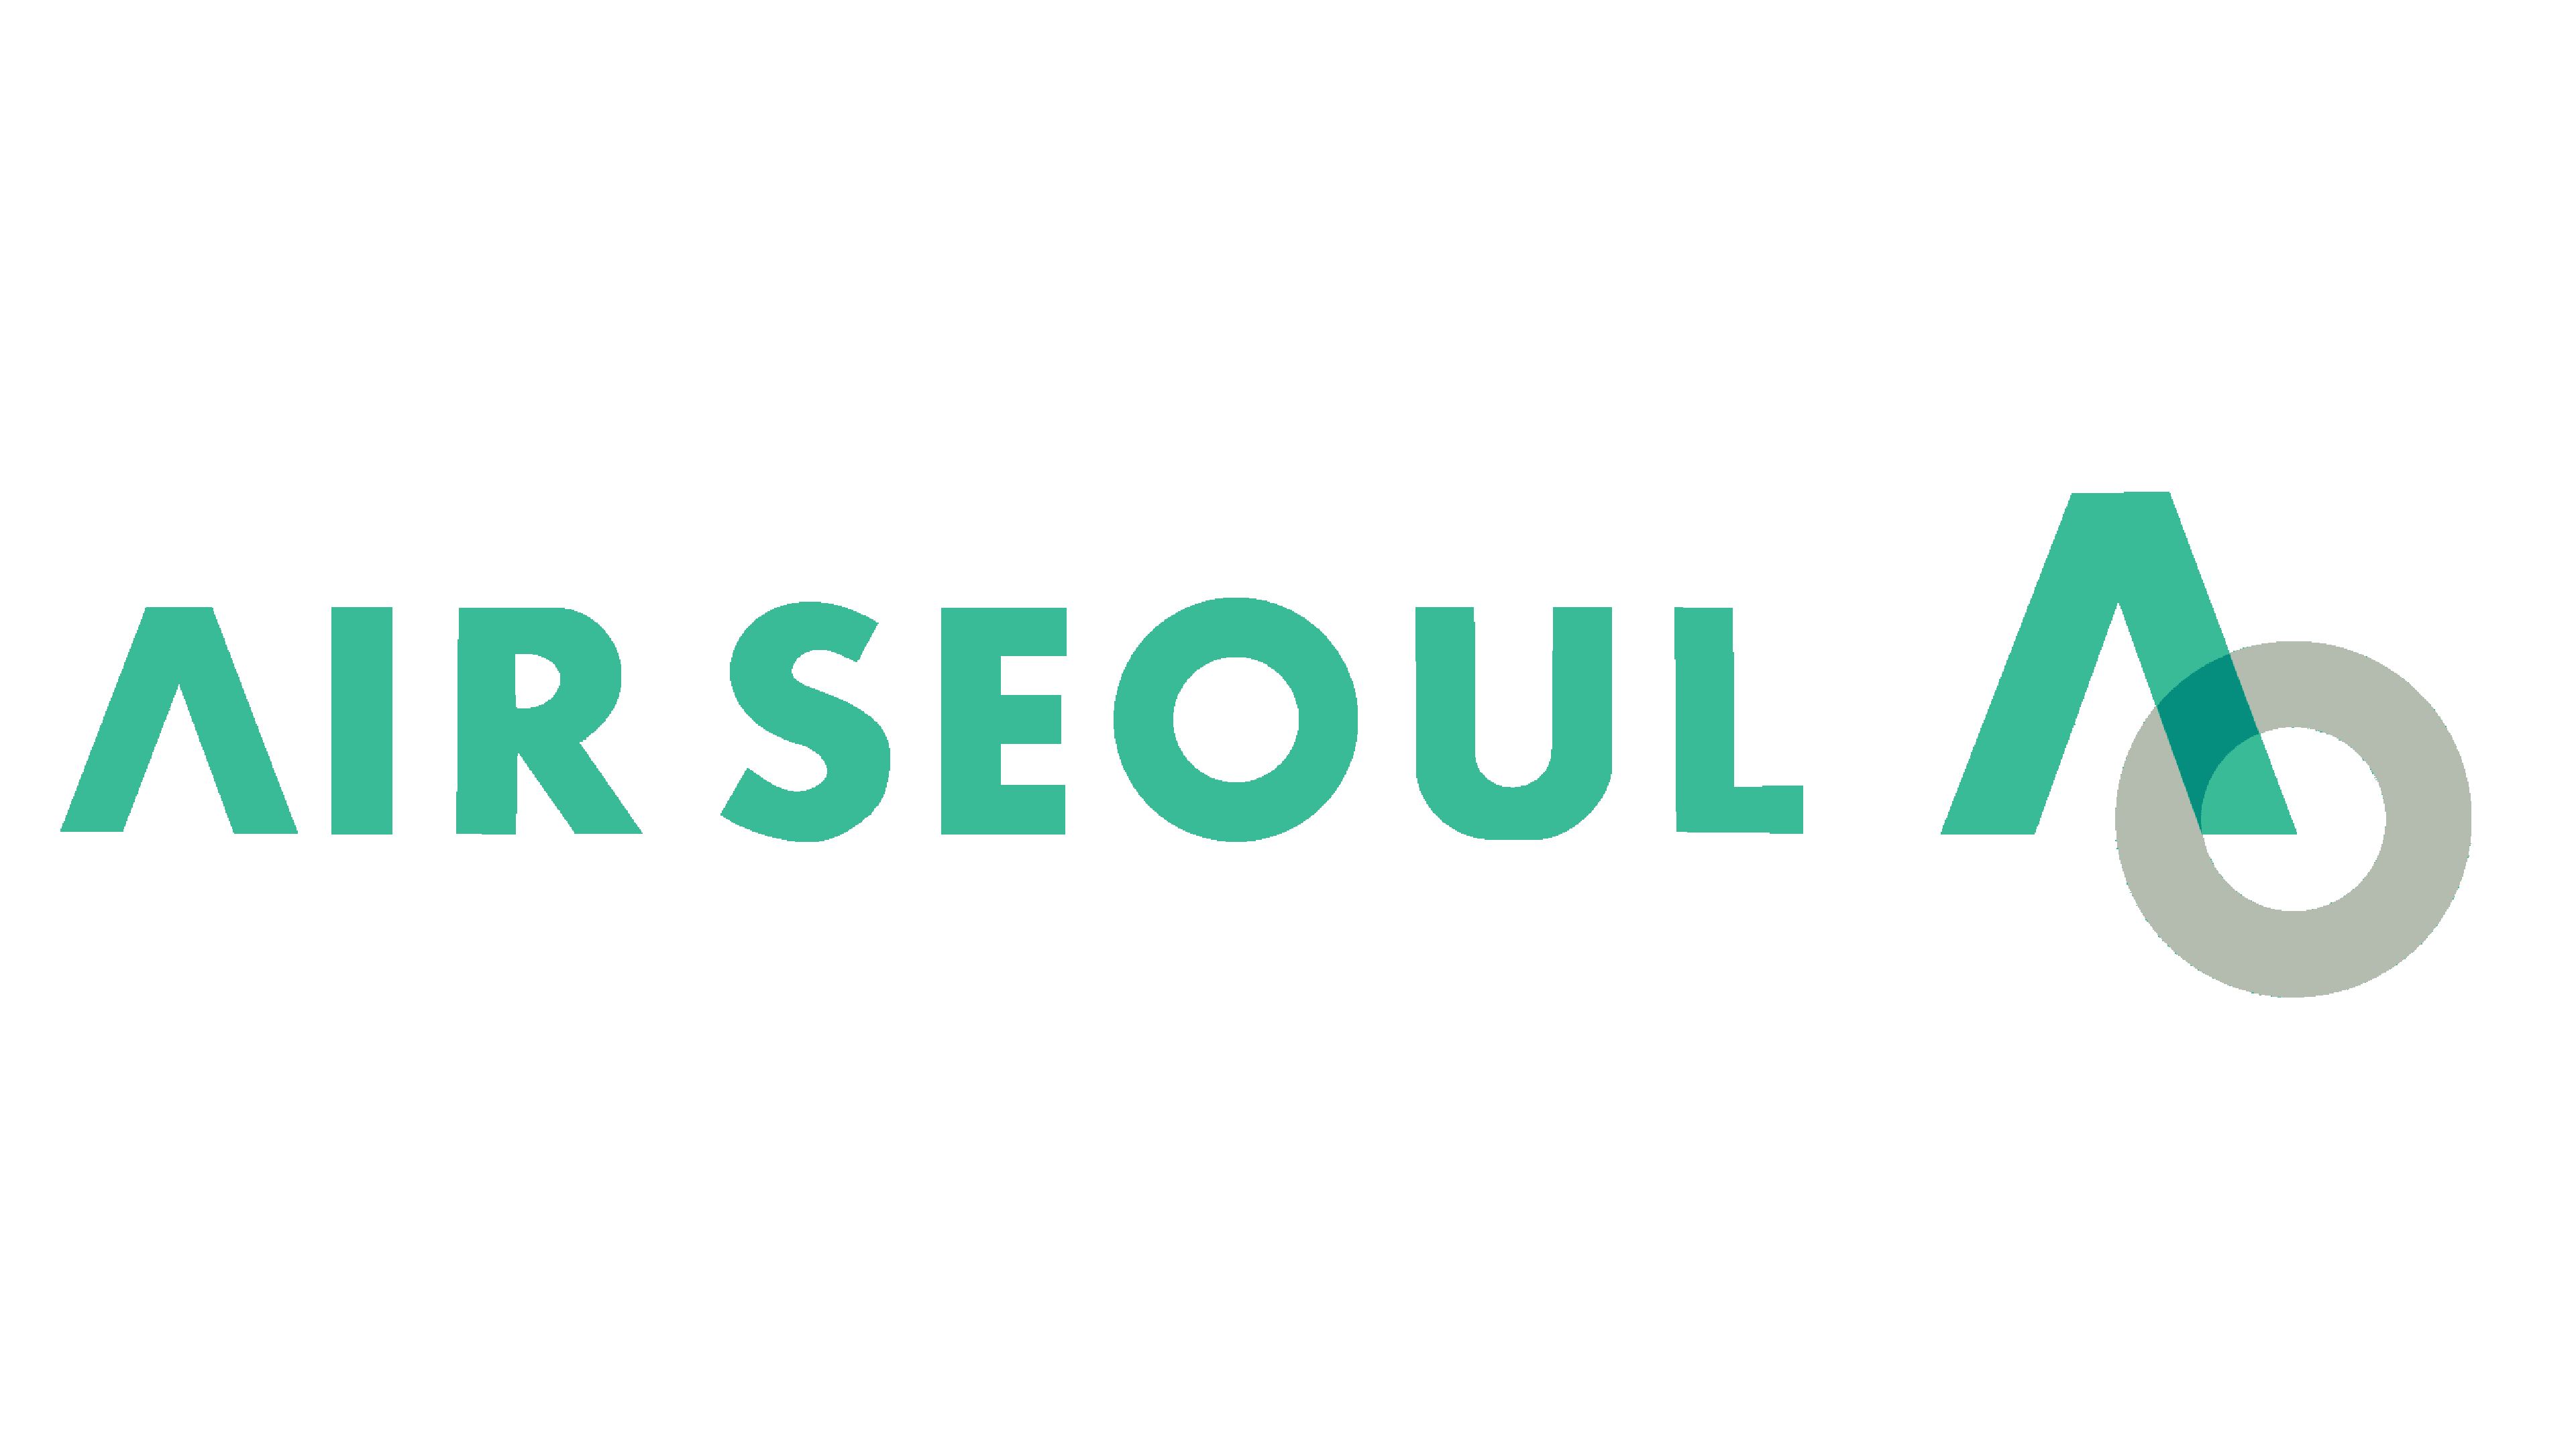 Logotipo de Air Seoul Logo